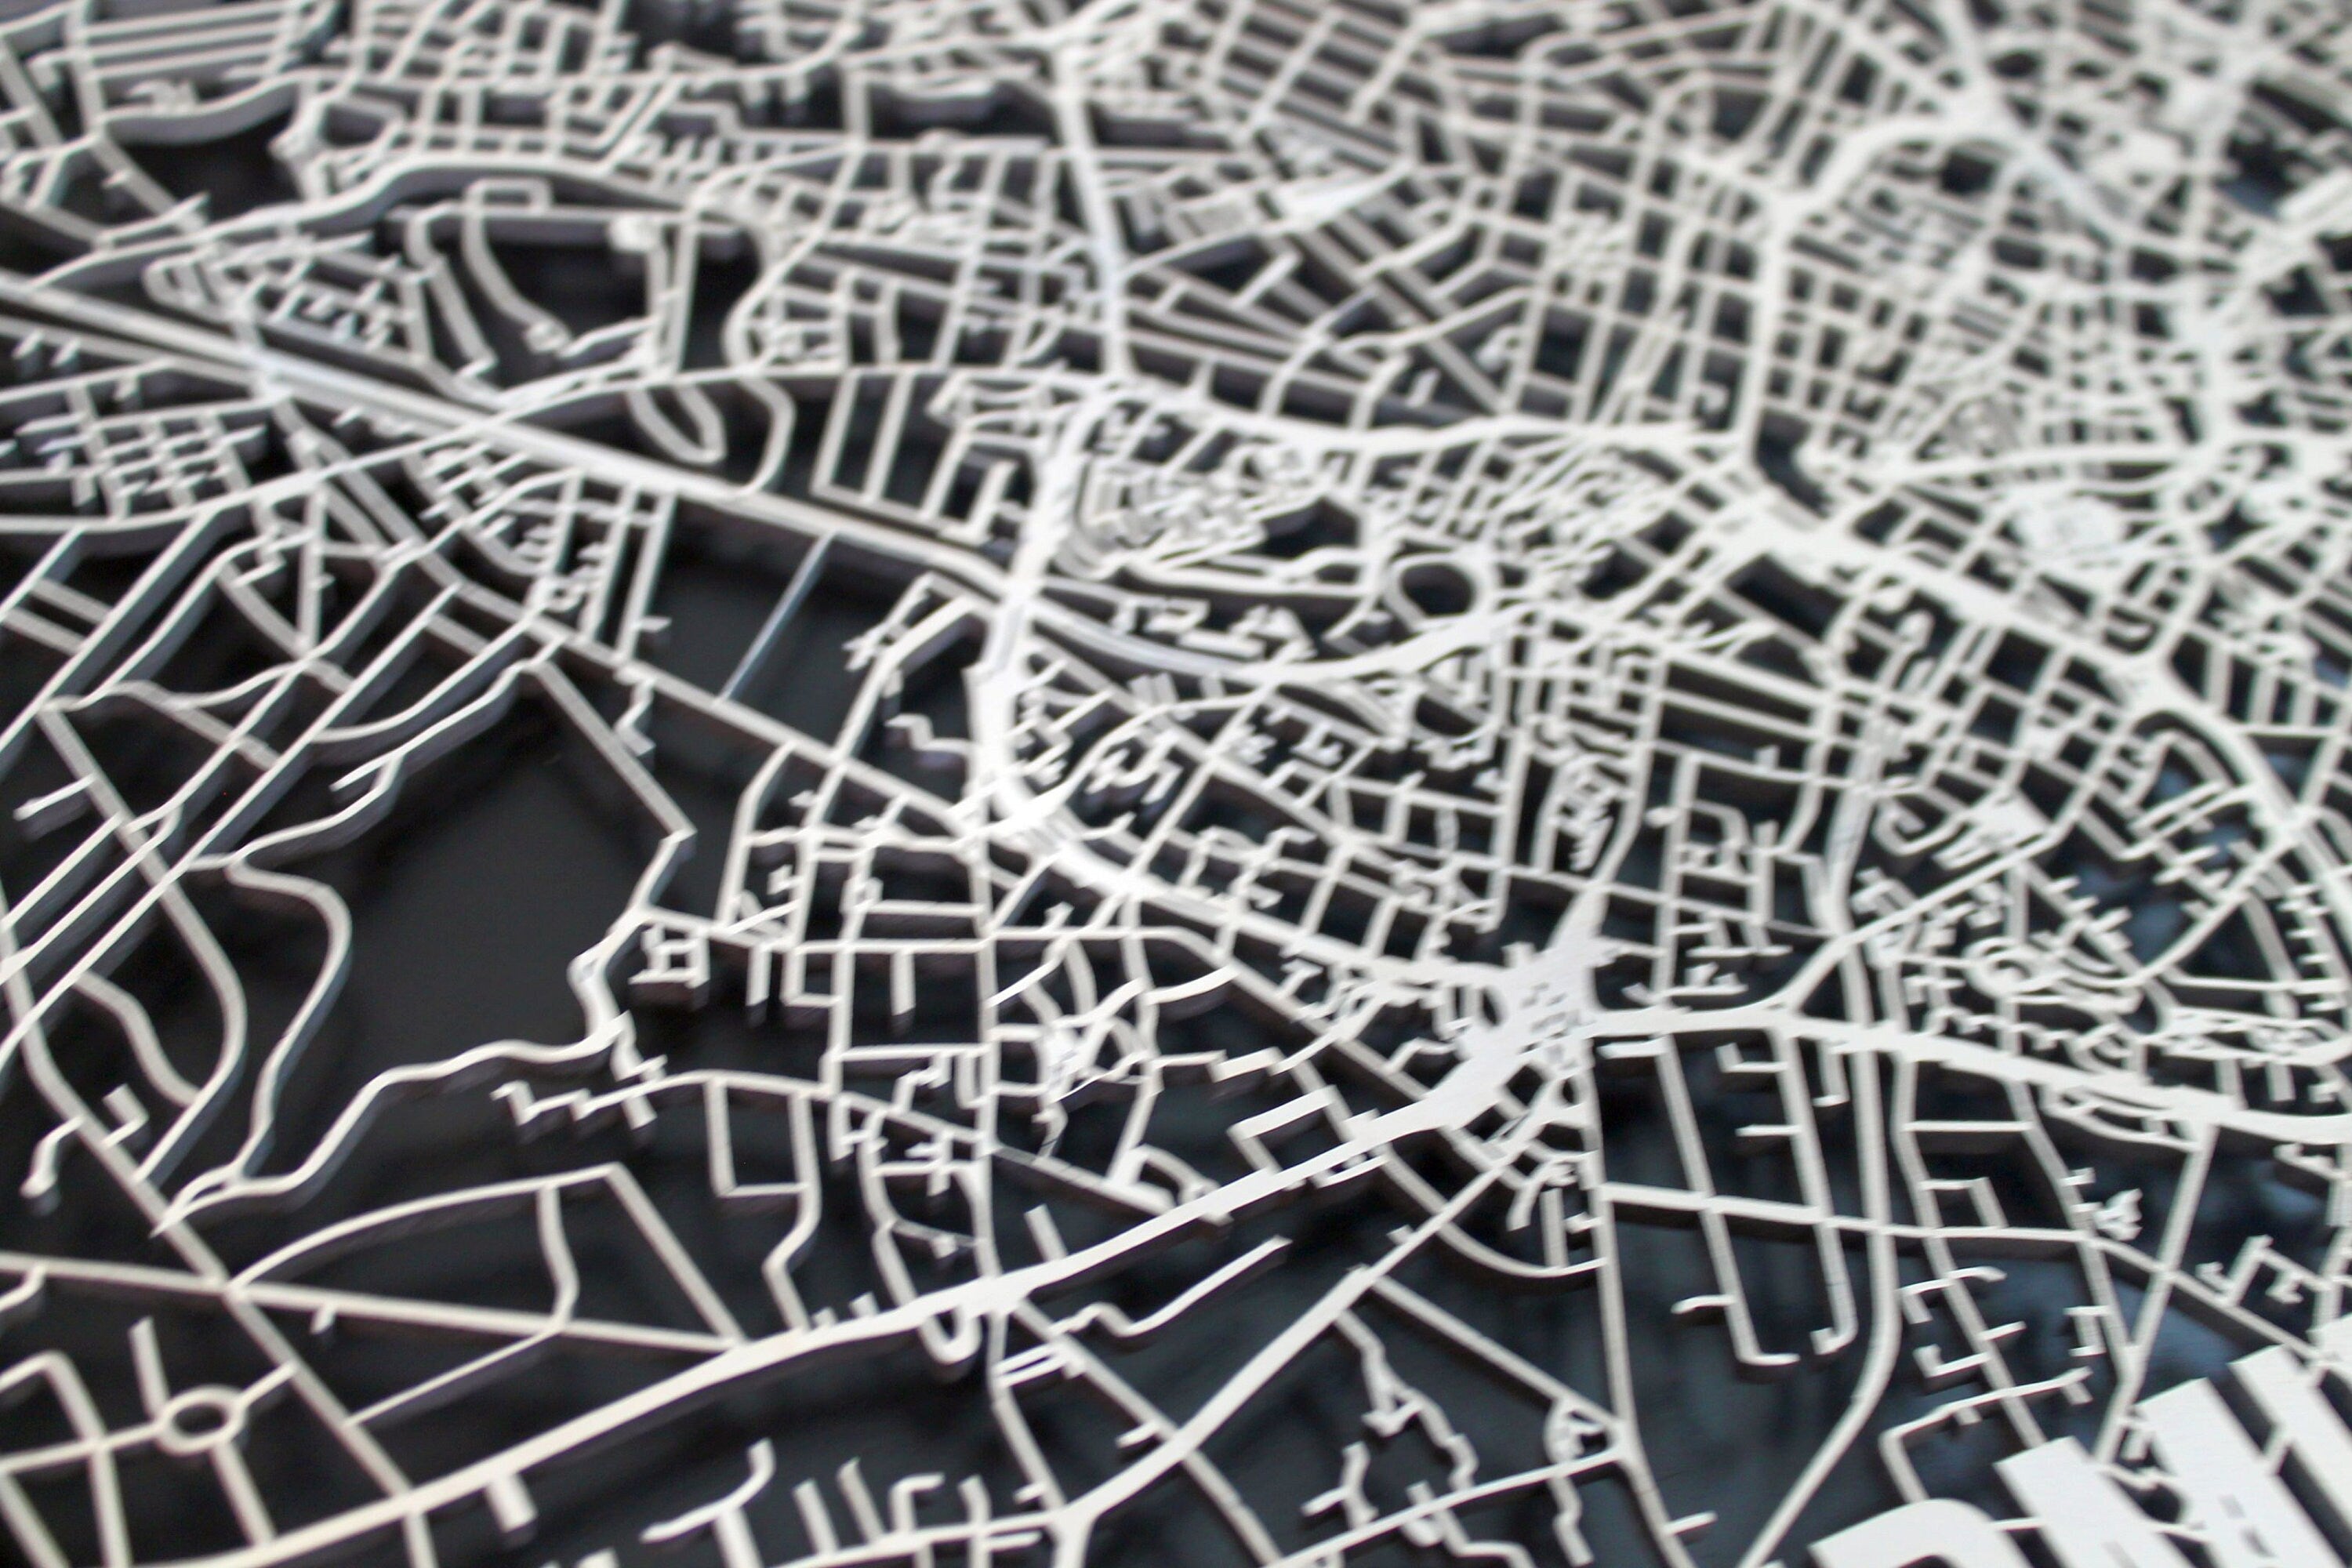 Birmingham Wood Map Laser Cut Street Maps Wooden Map